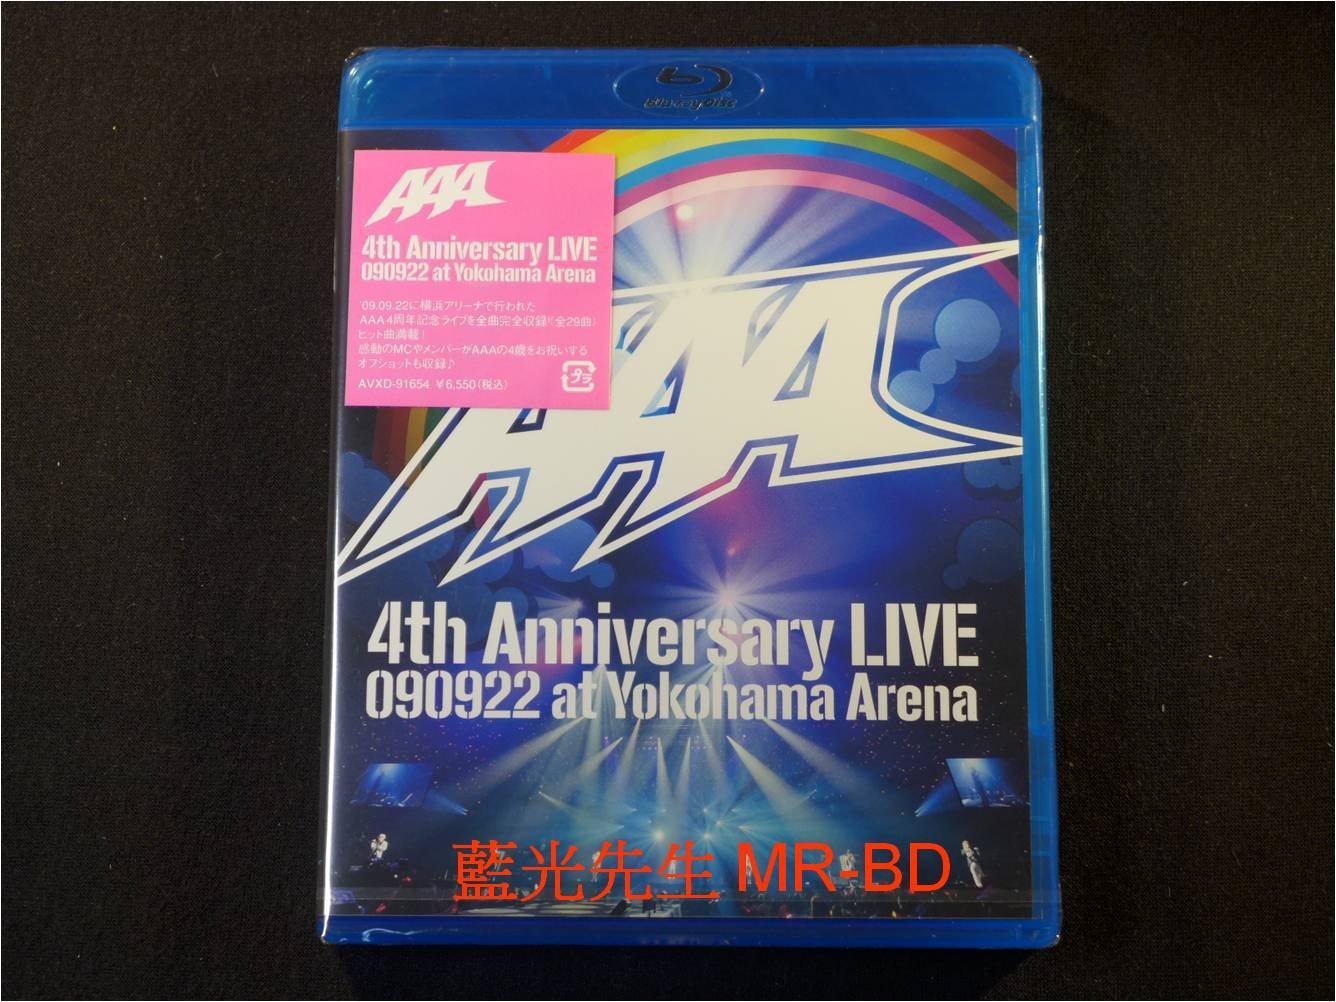 藍光bd a 四週年紀念橫濱演唱會aaa 4th Anniversary Live At Yokohama Arena 50g Pchome商店街 台灣no 1 網路開店平台